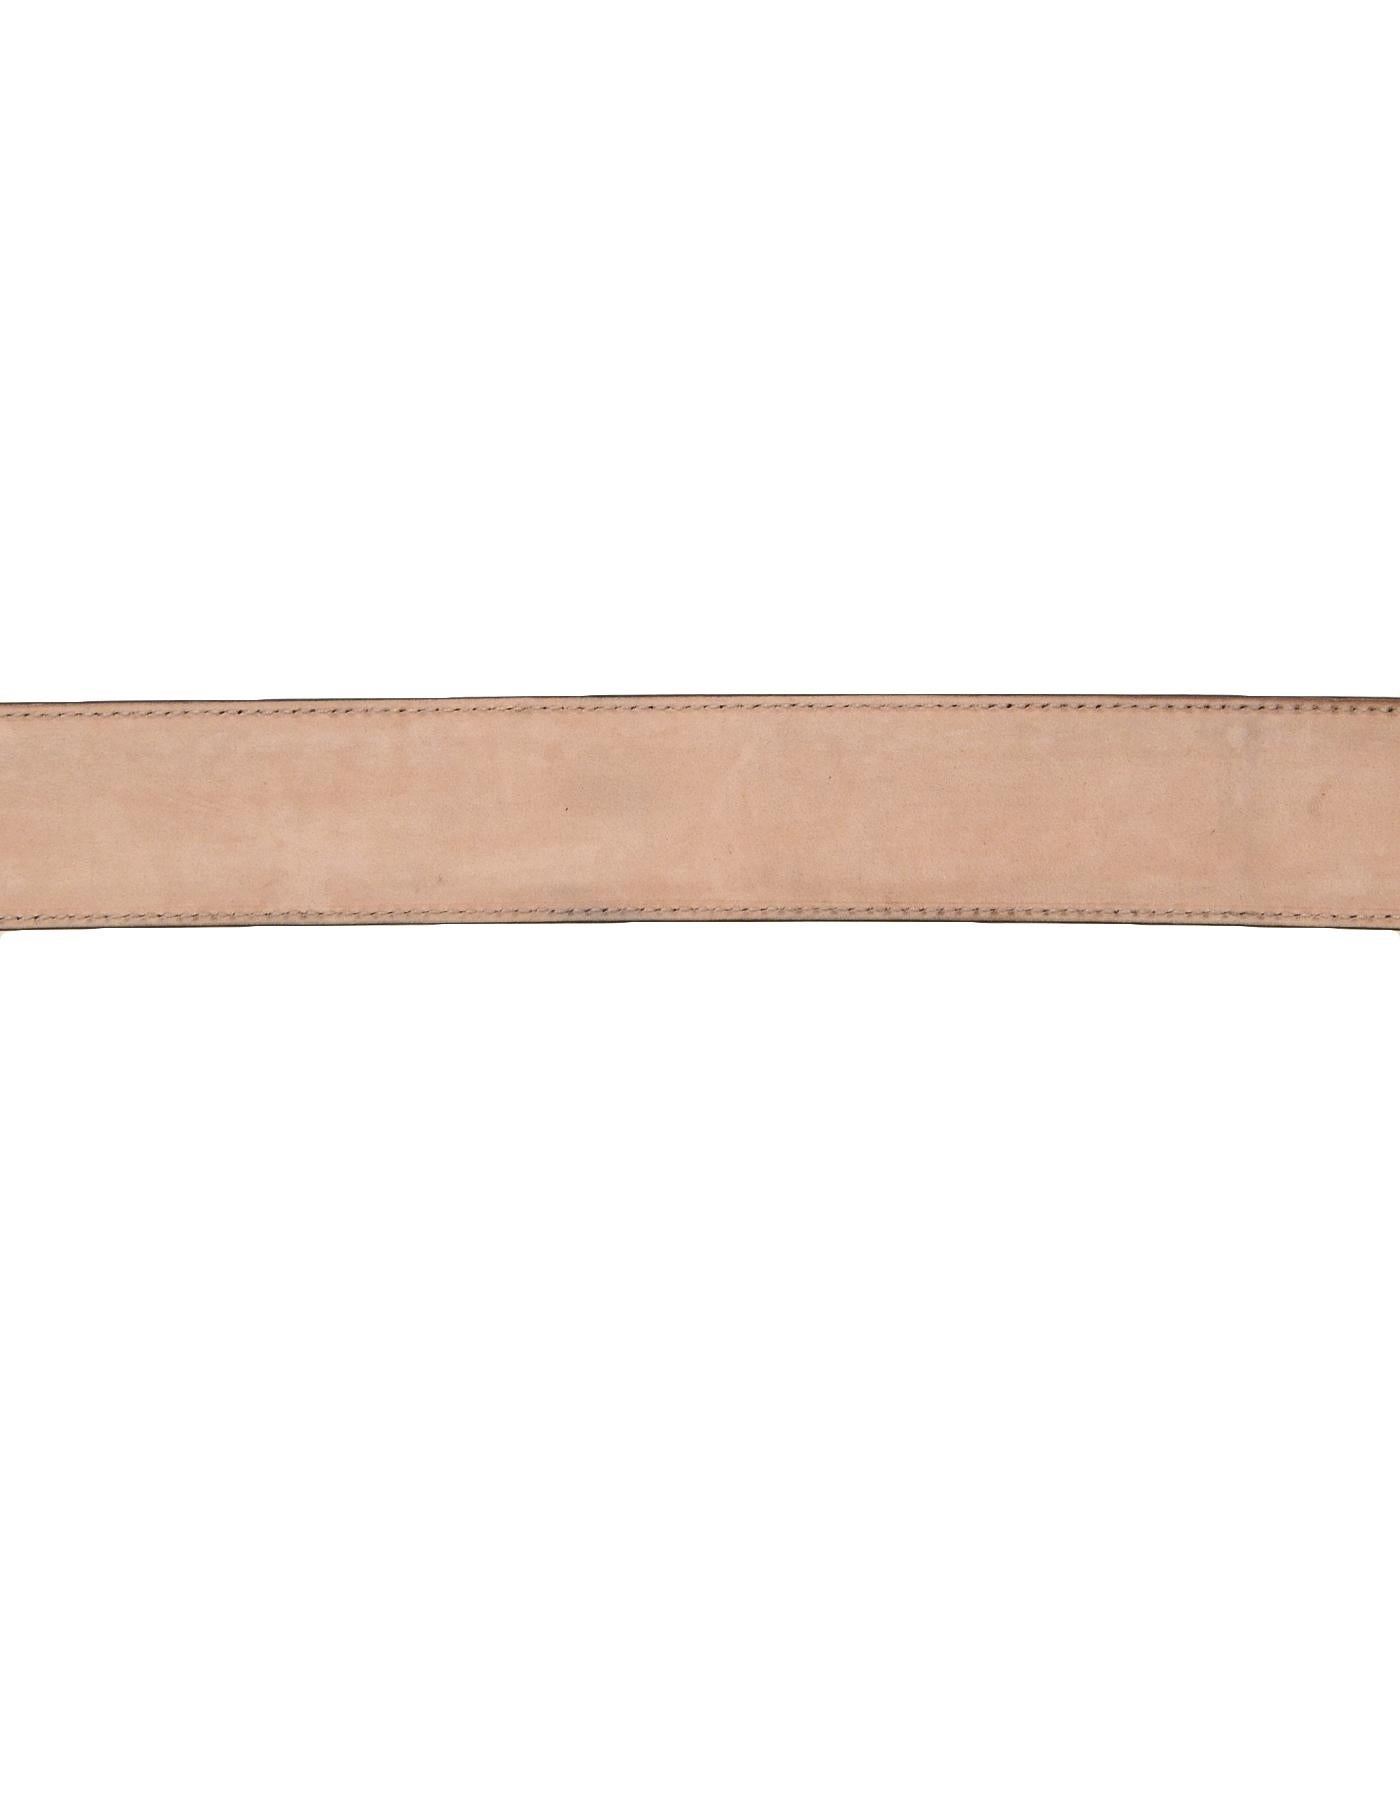 Gucci Black Leather Monogram Signature Leather Belt sz 38 1